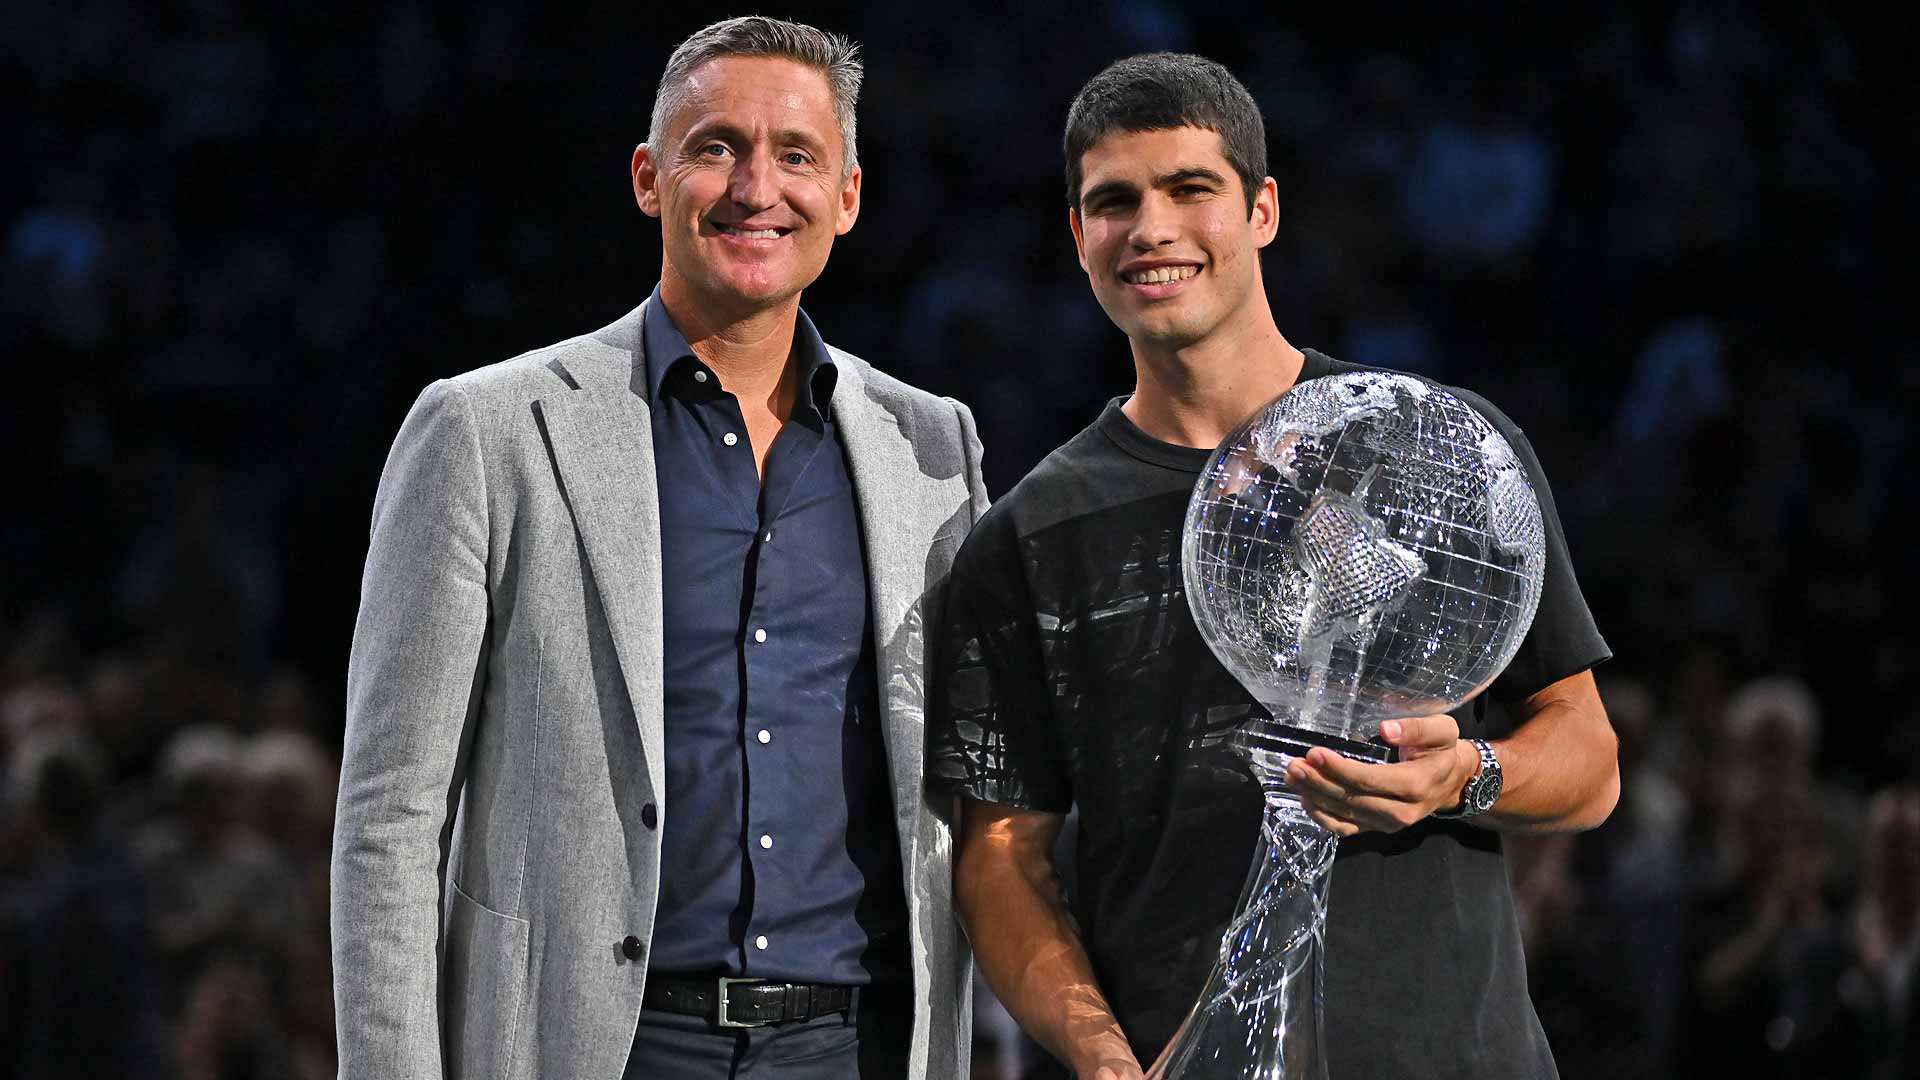 Tennis Player Carlos Alcaraz Presented with No. 1 Trophy, Making